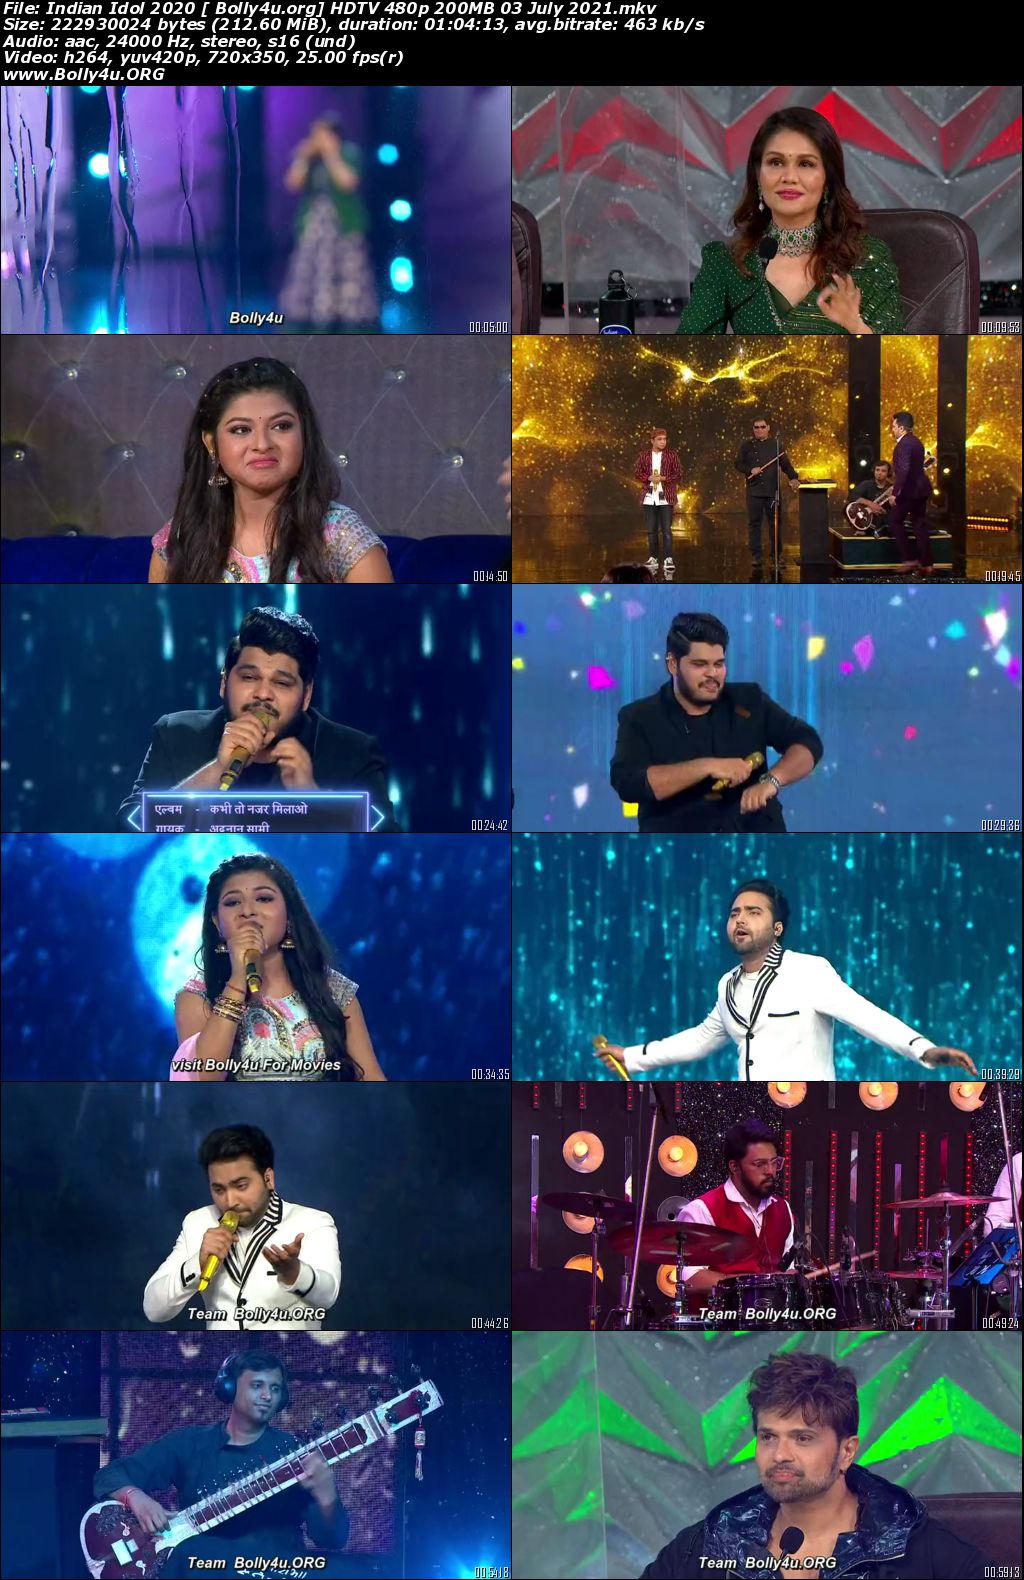 Indian Idol HDTV 480p 200MB 03 July 2021 Download